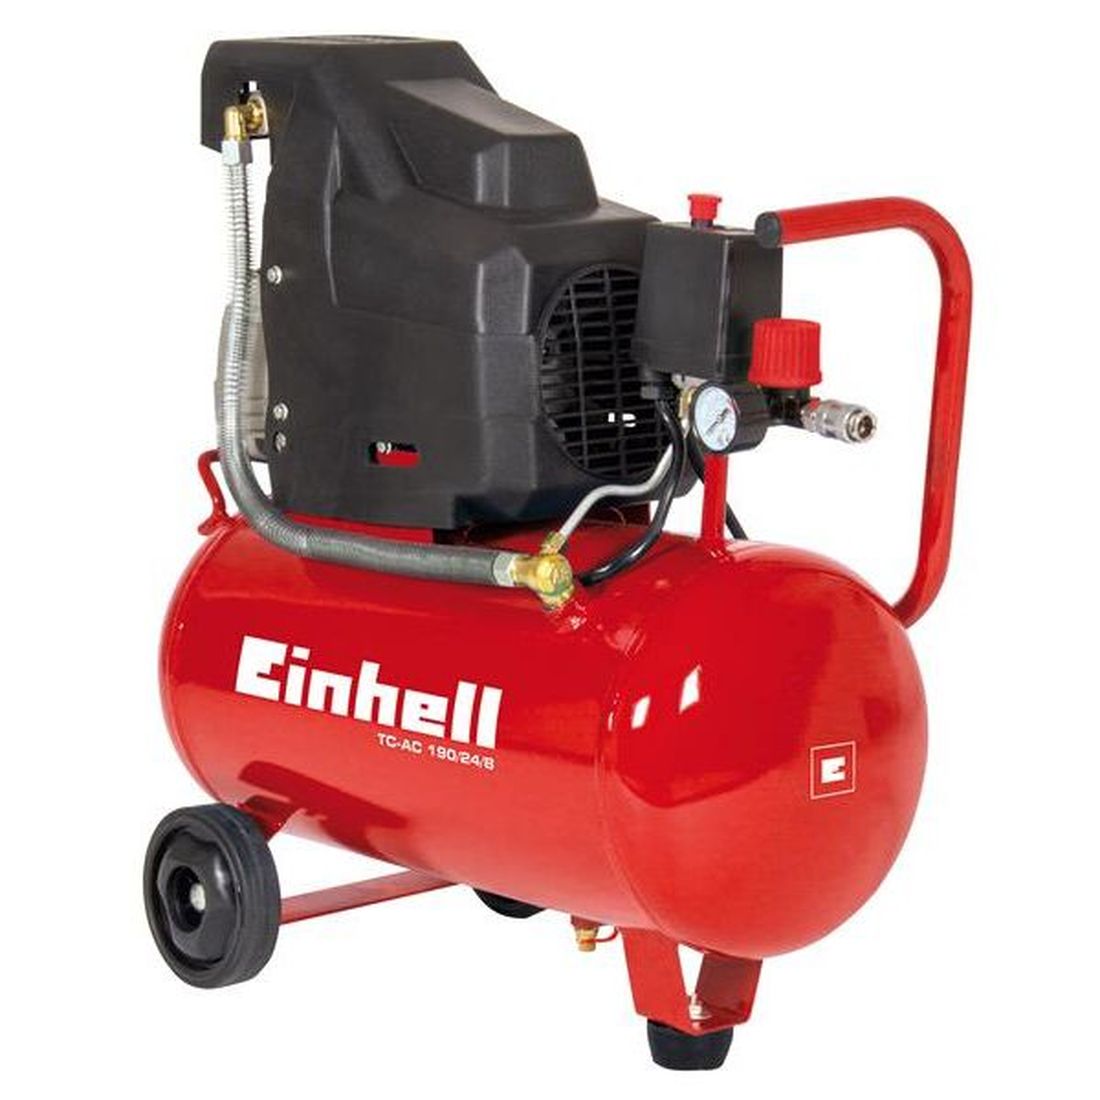 Einhell TC-AC 190/24/8 Air Compressor     